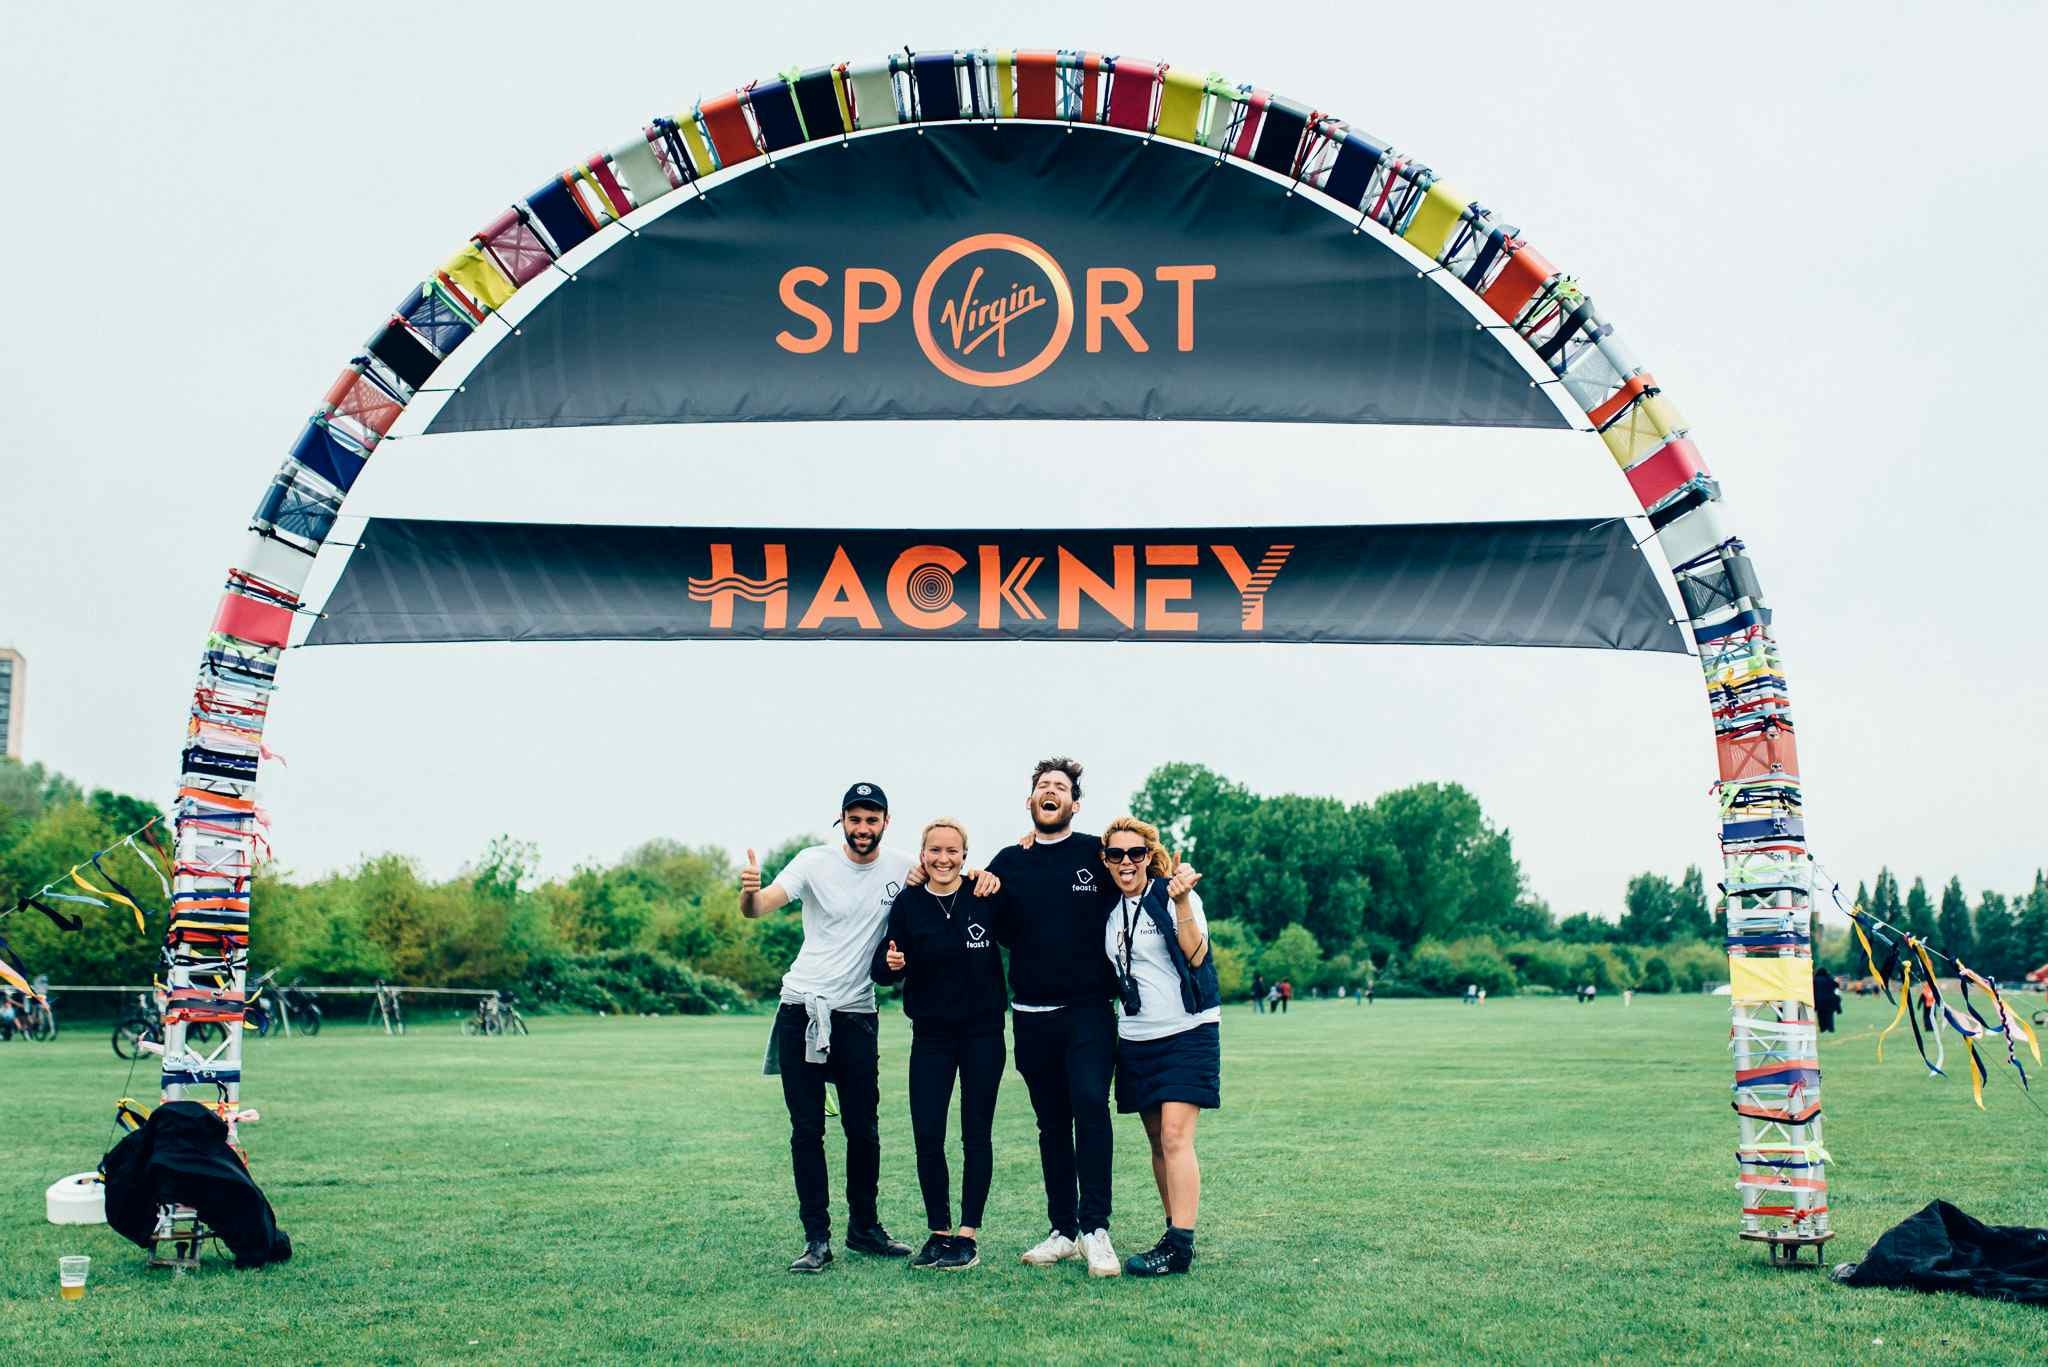 Hackney Festival Of Fitness With Virgin Sport